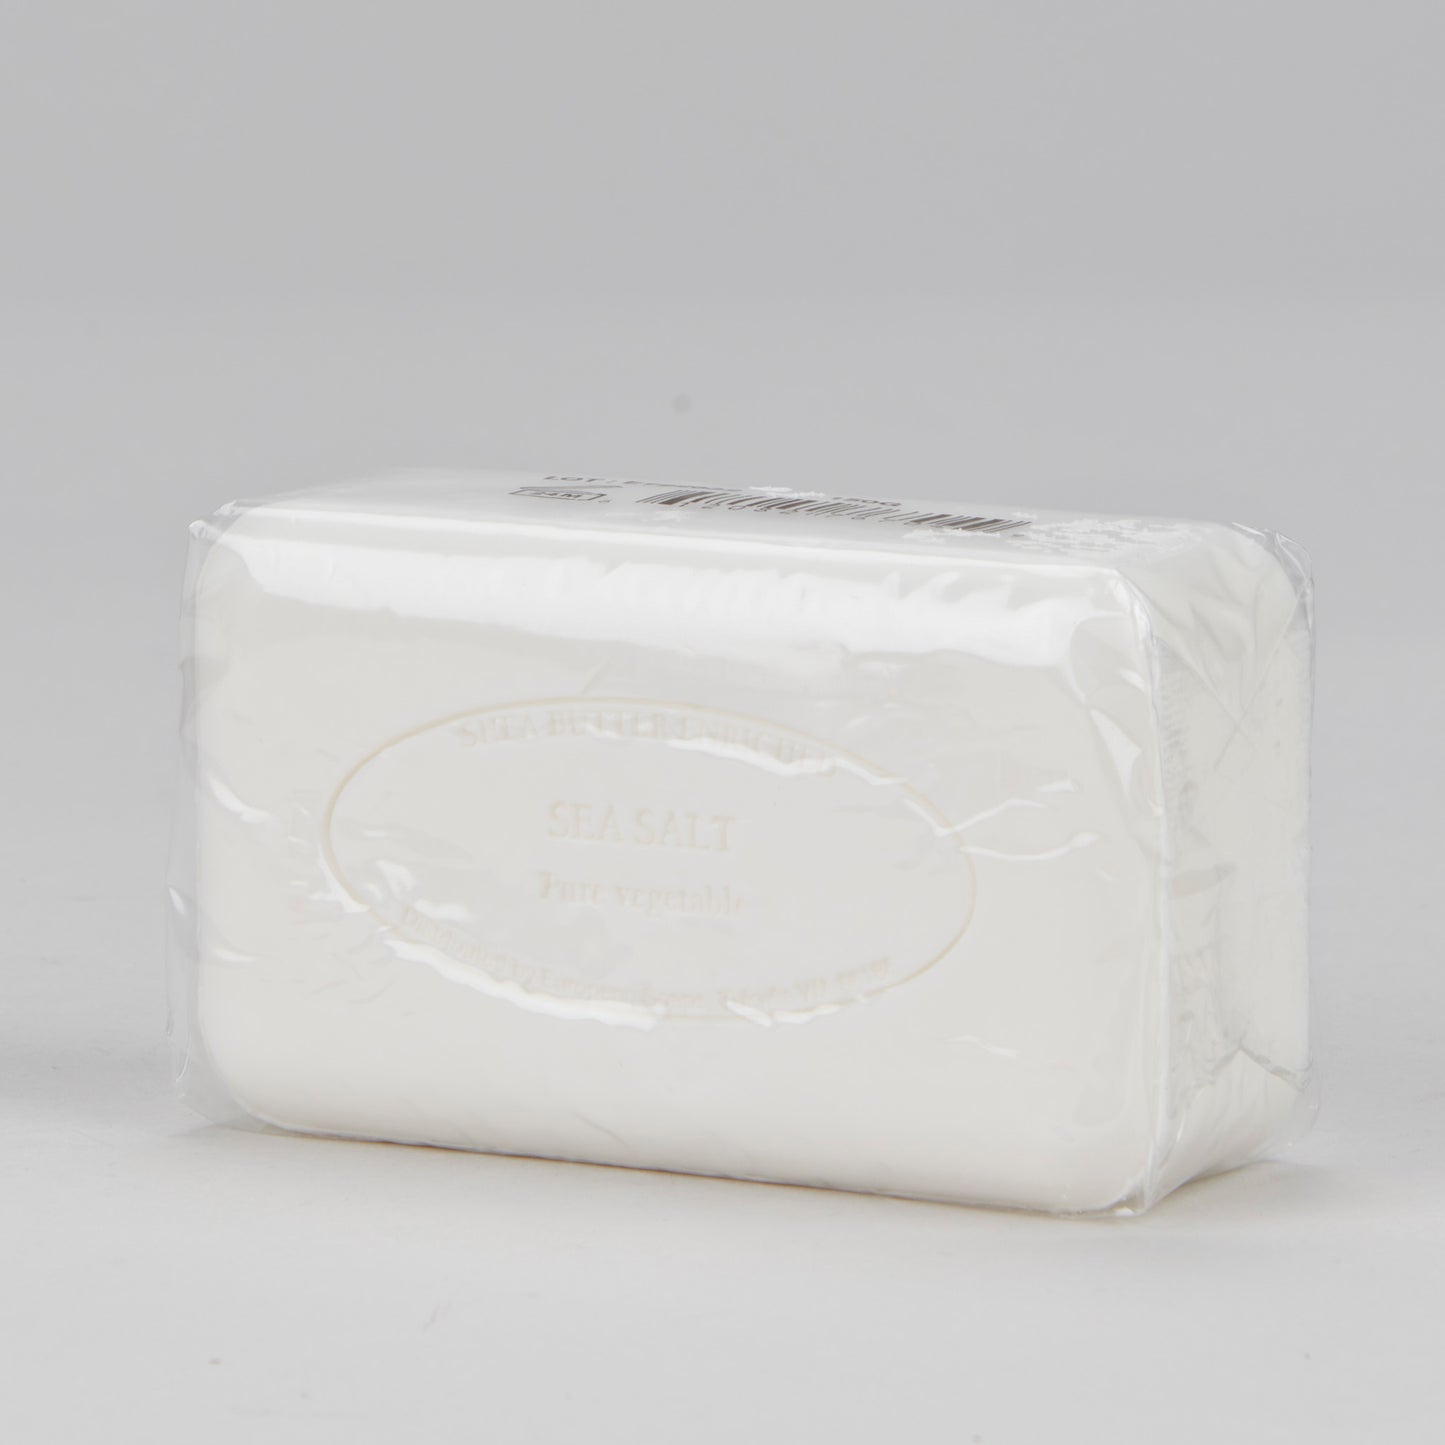 Soap Bar, Sea Salt - 150g